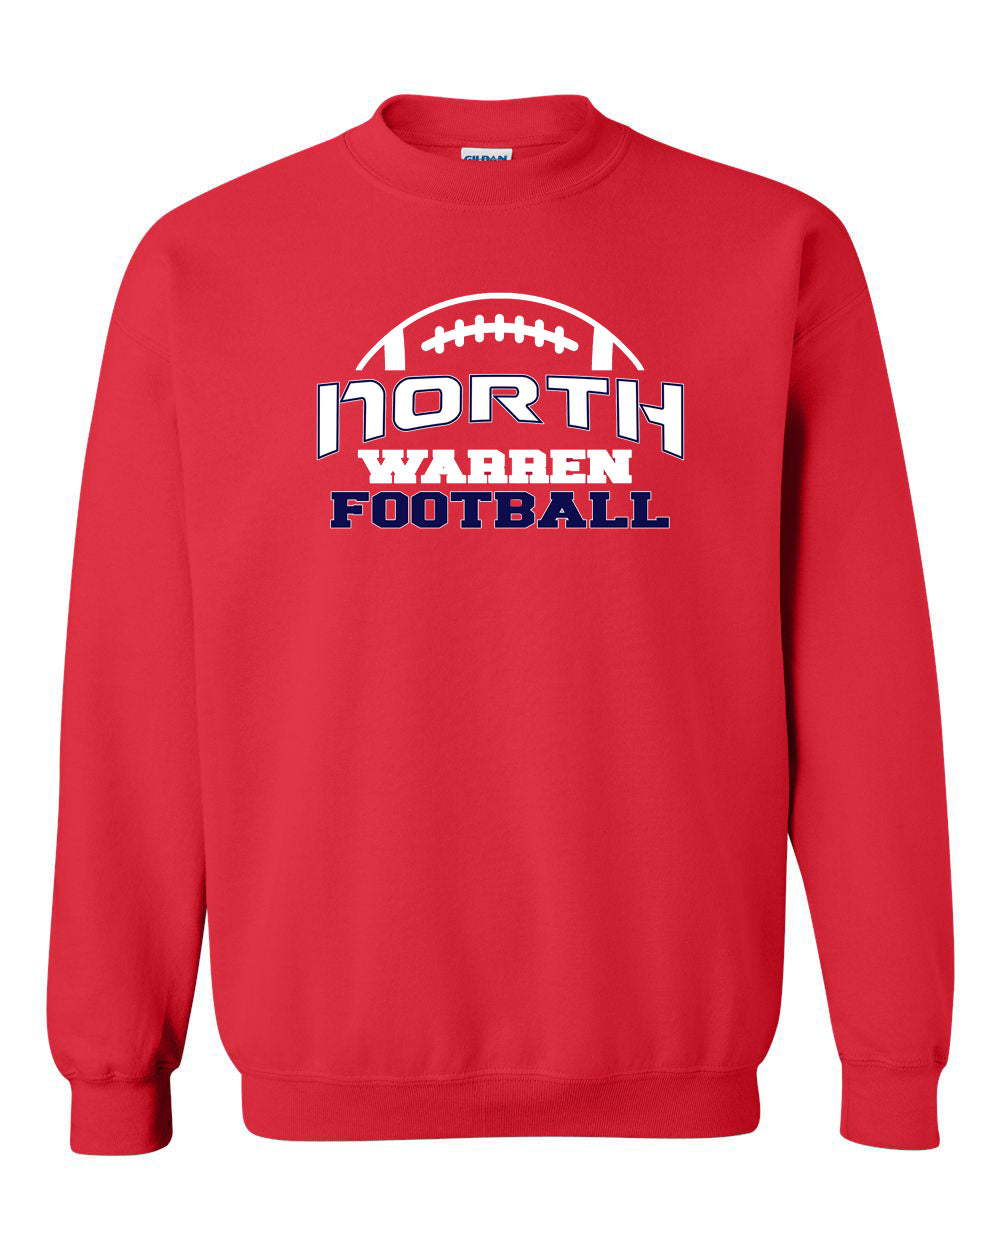 NW Football Design 1 non hooded sweatshirt